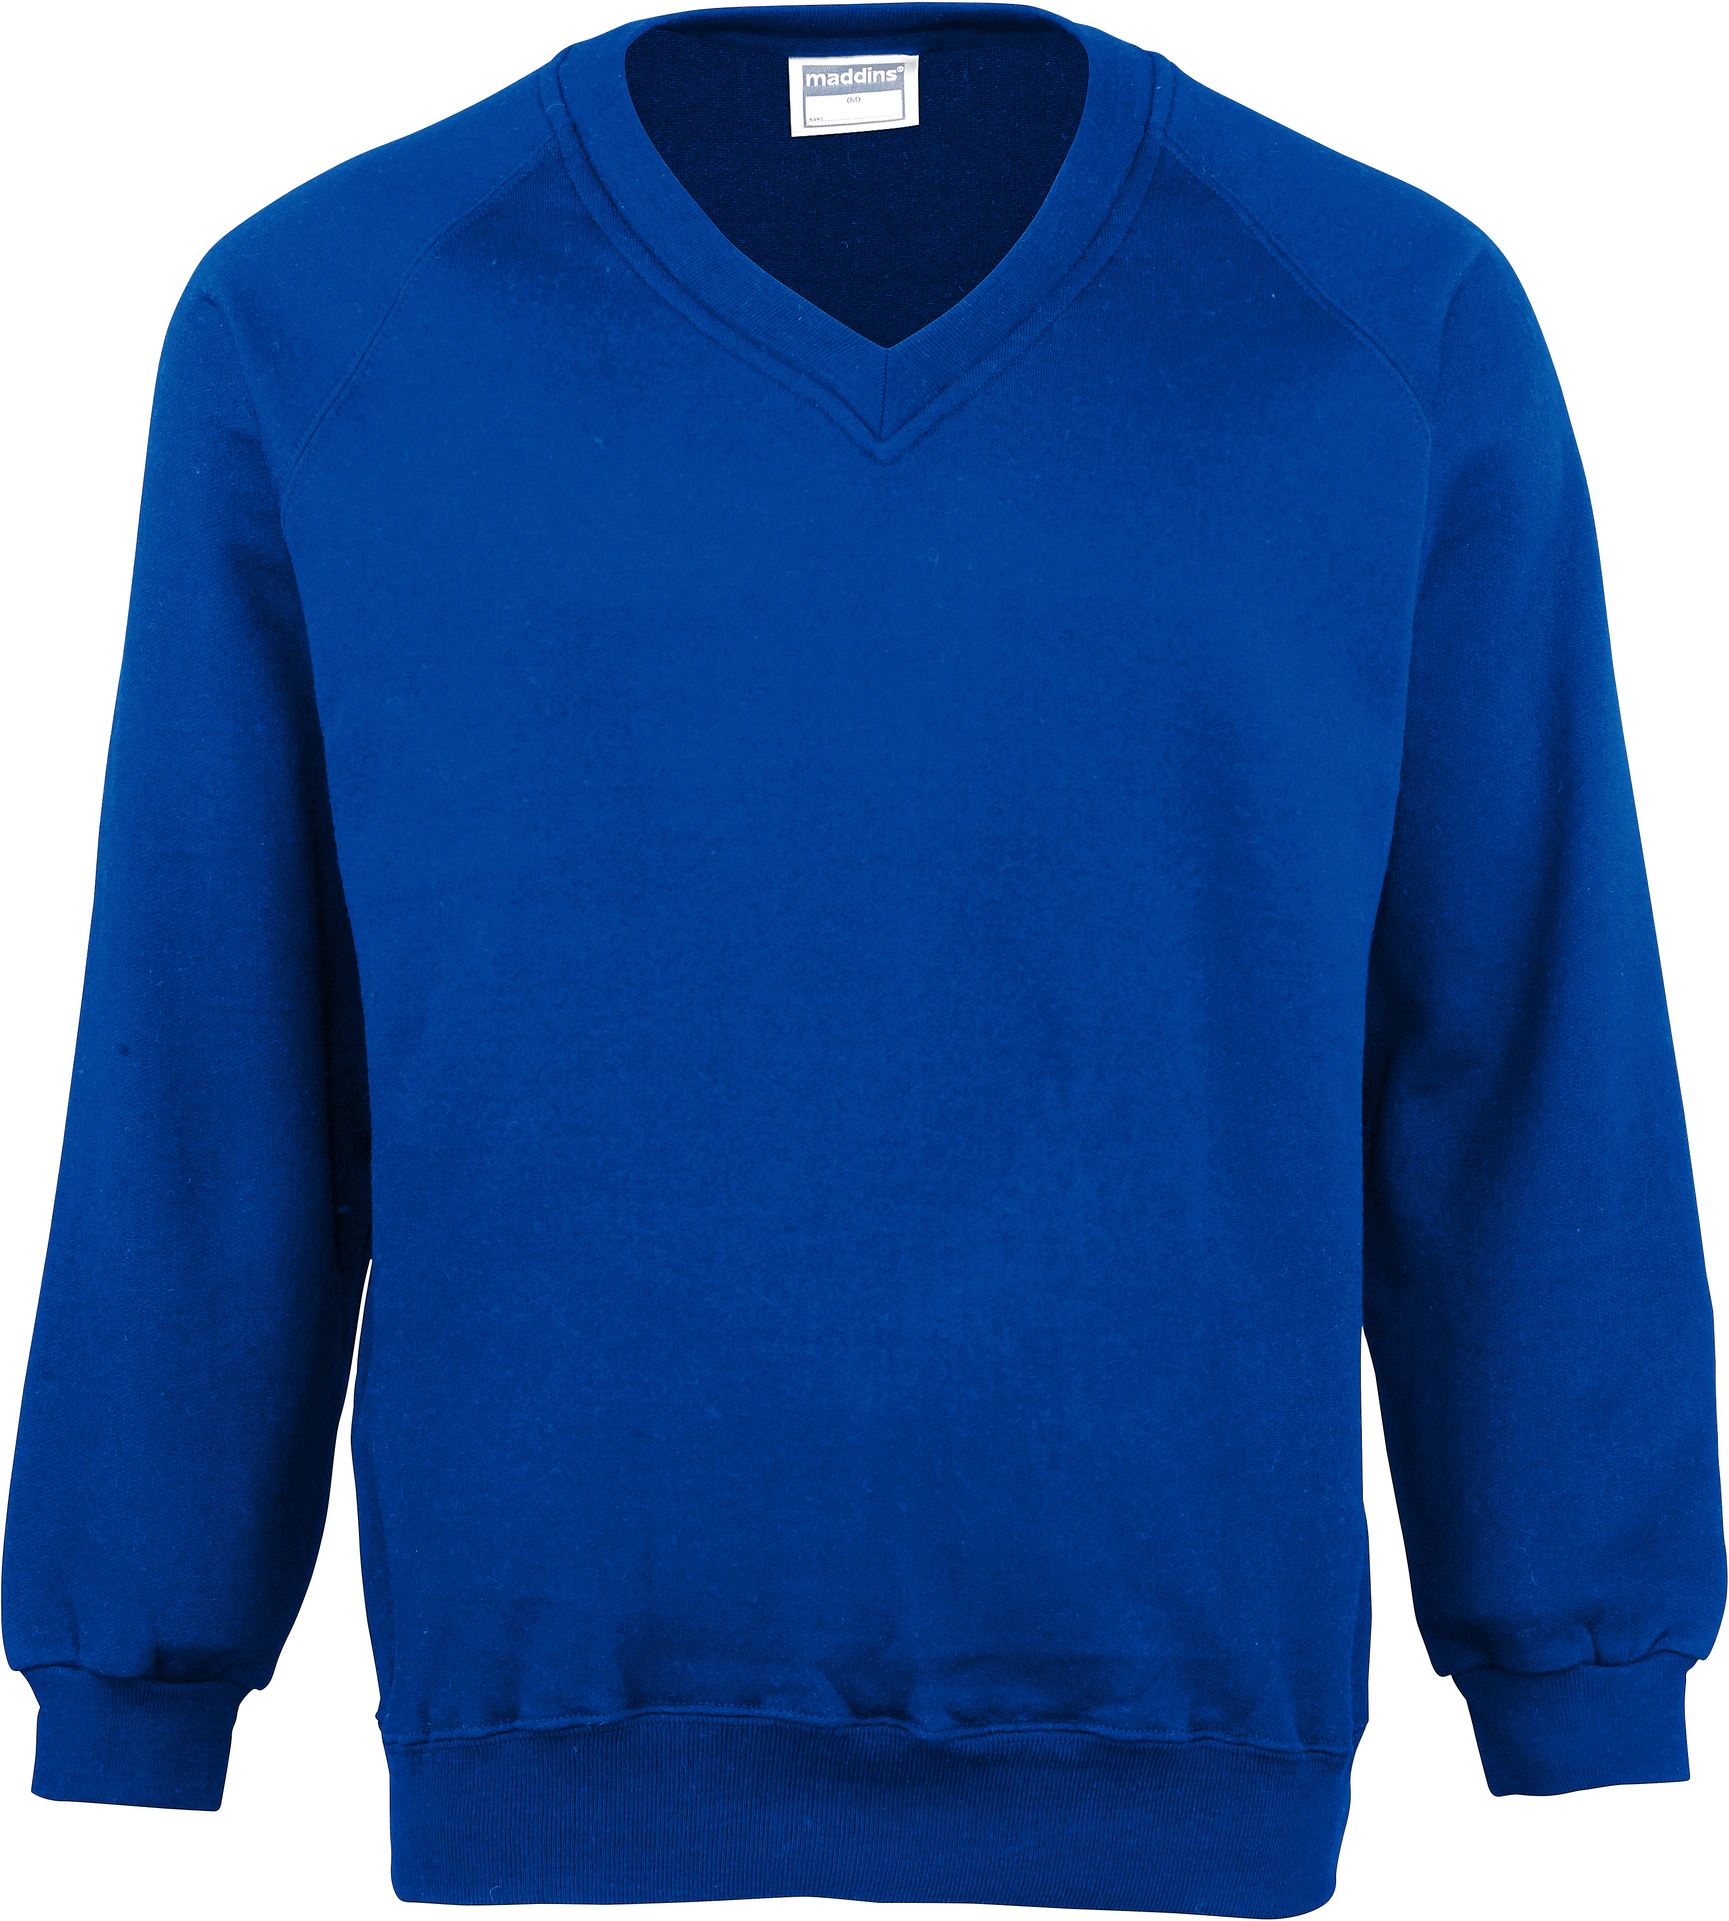 Maddins Sweatshirt Pullover Coloursure V Neckline